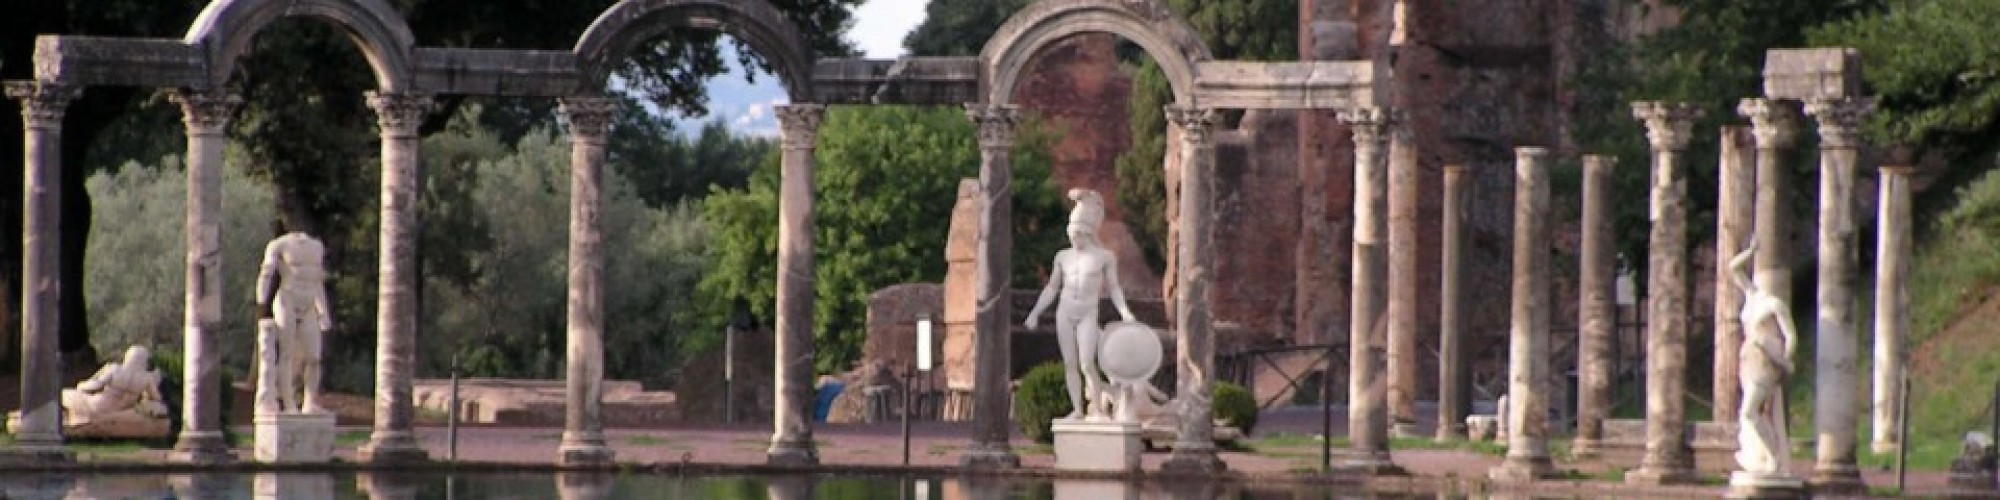 Hadrian's Villa, Evocations of a Man Through Architecture